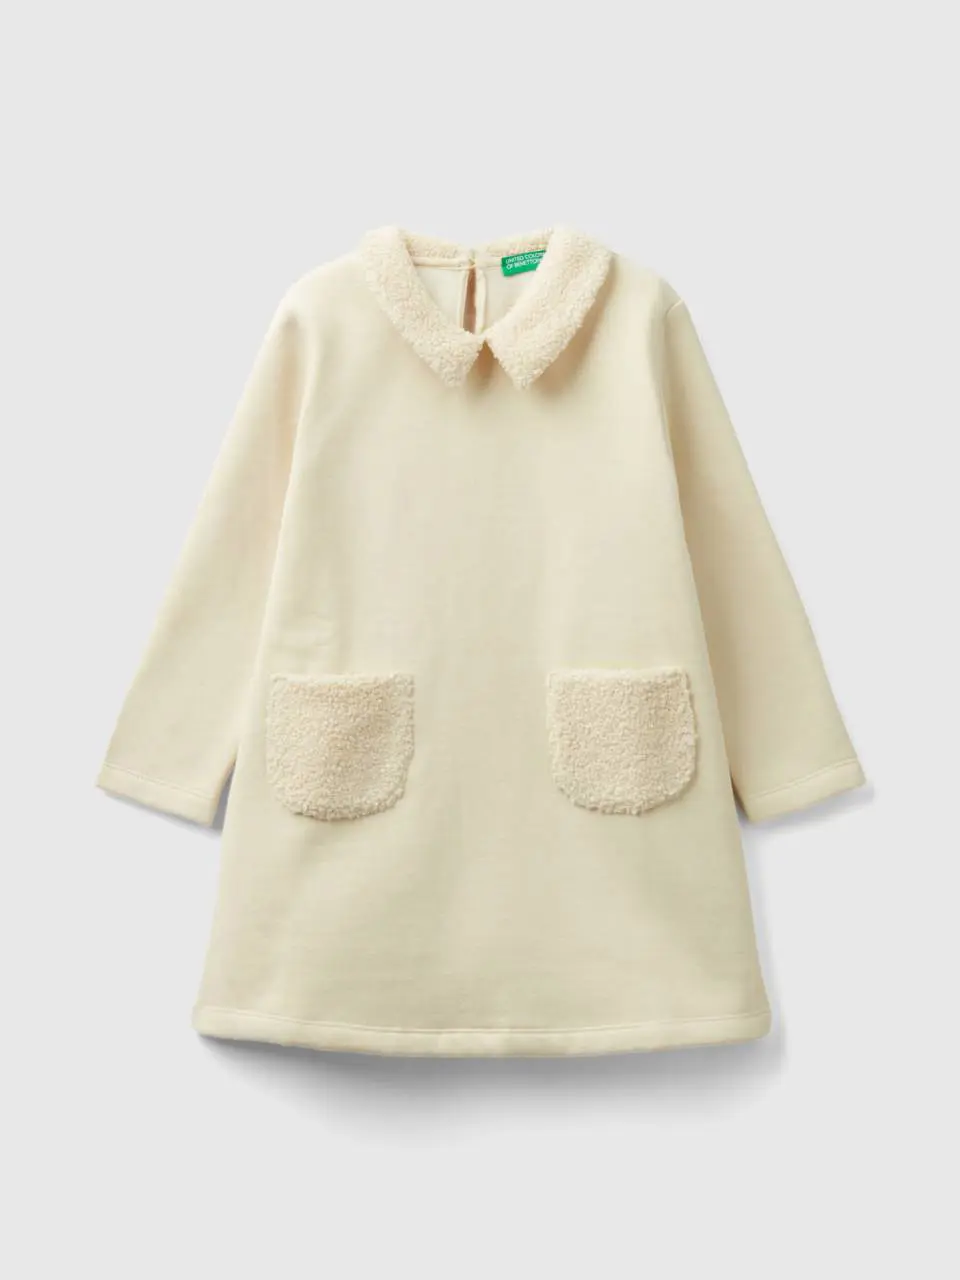 Benetton dress in warm cotton blend. 1